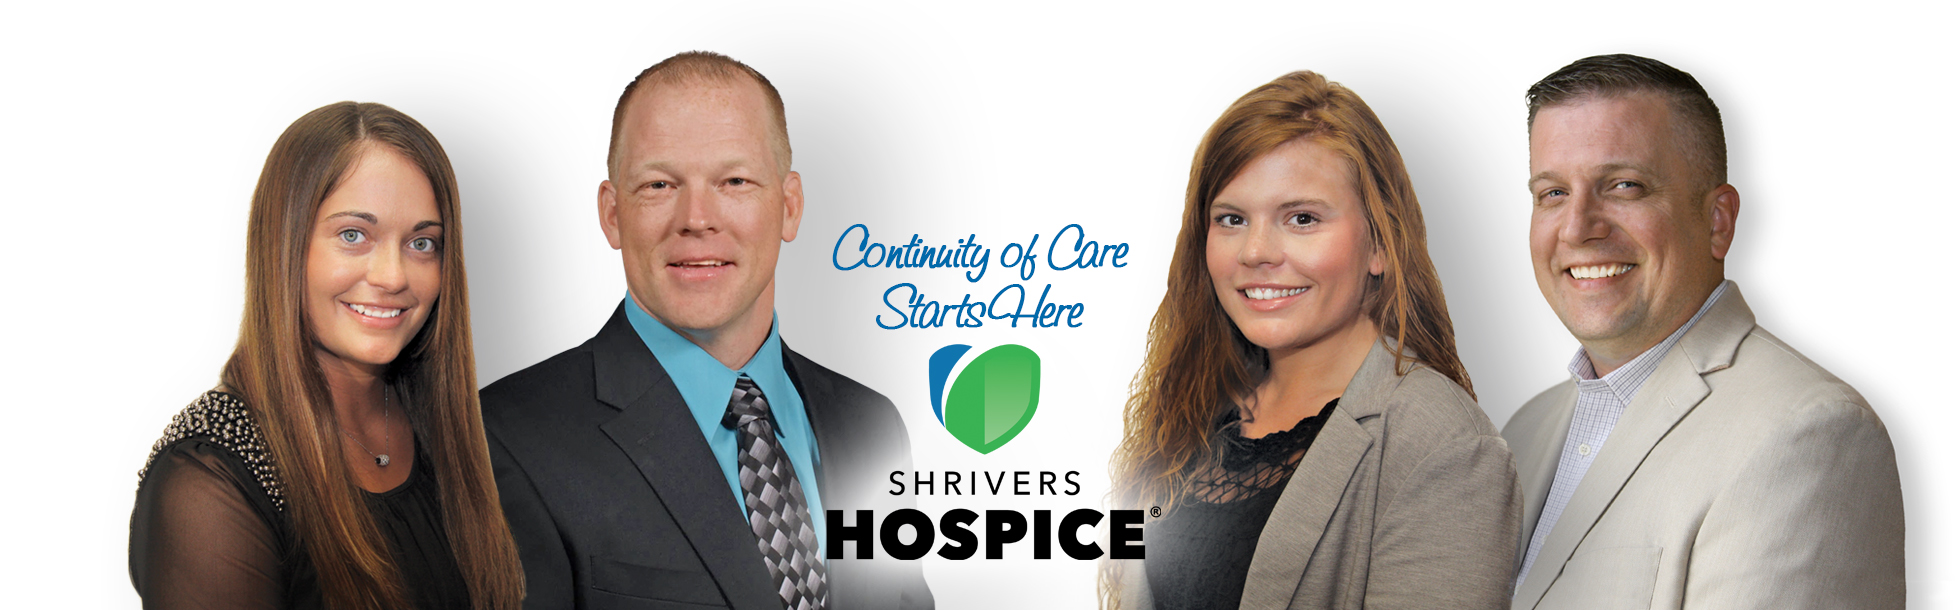 Shrivers-Pharmacy-Home-Hospice-Wb